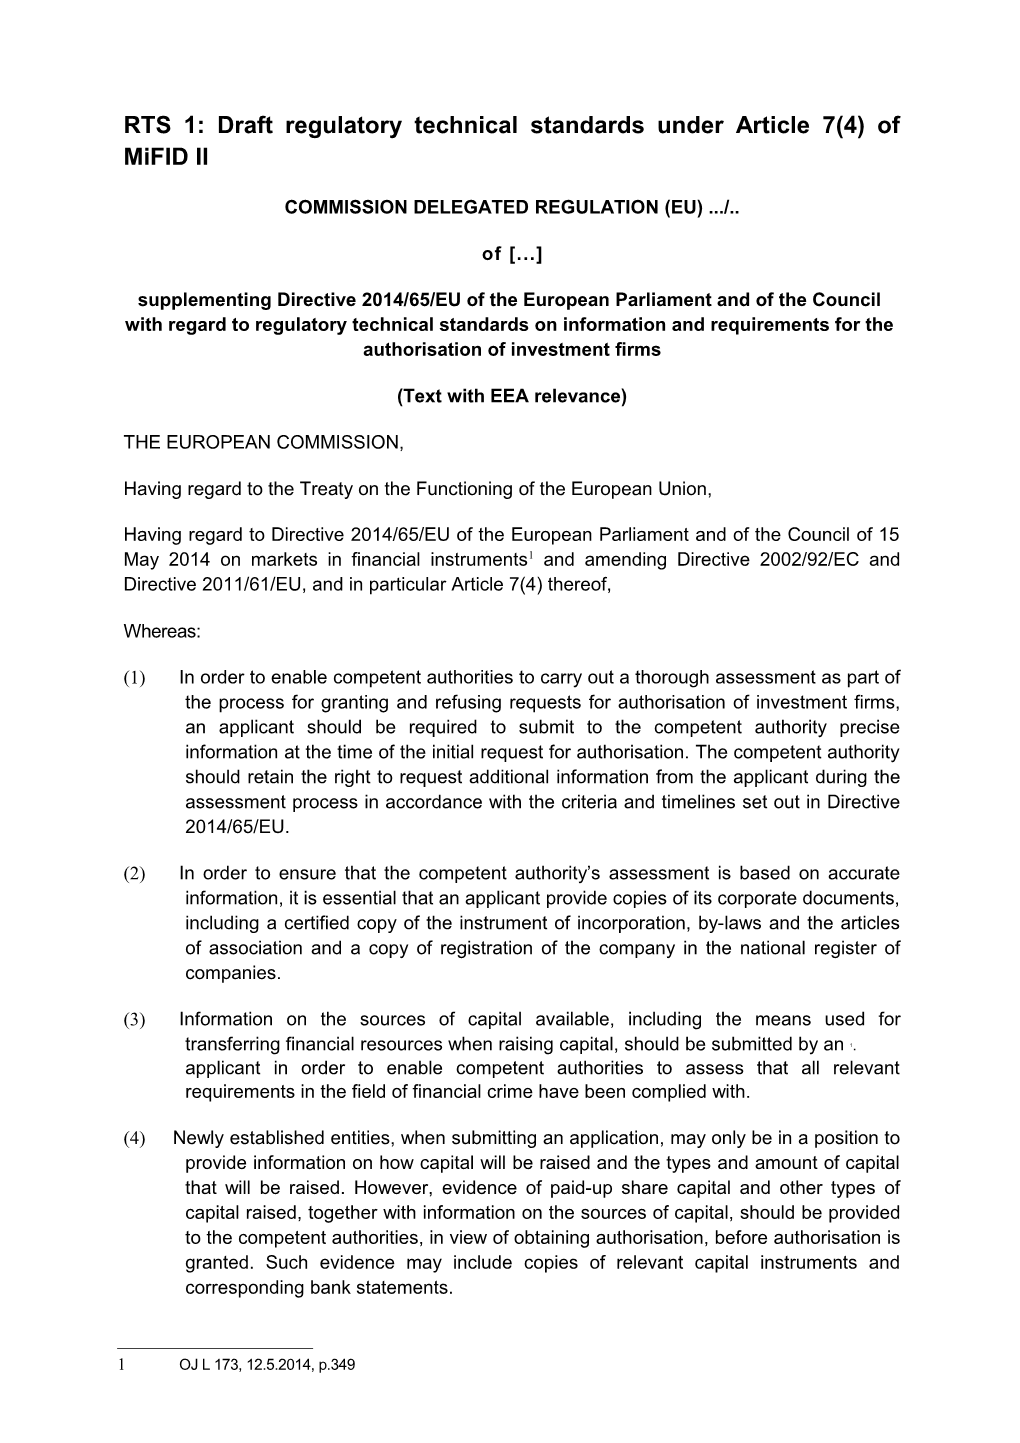 RTS 1: Draft Regulatory Technical Standards Under Article 7(4) of Mifid II